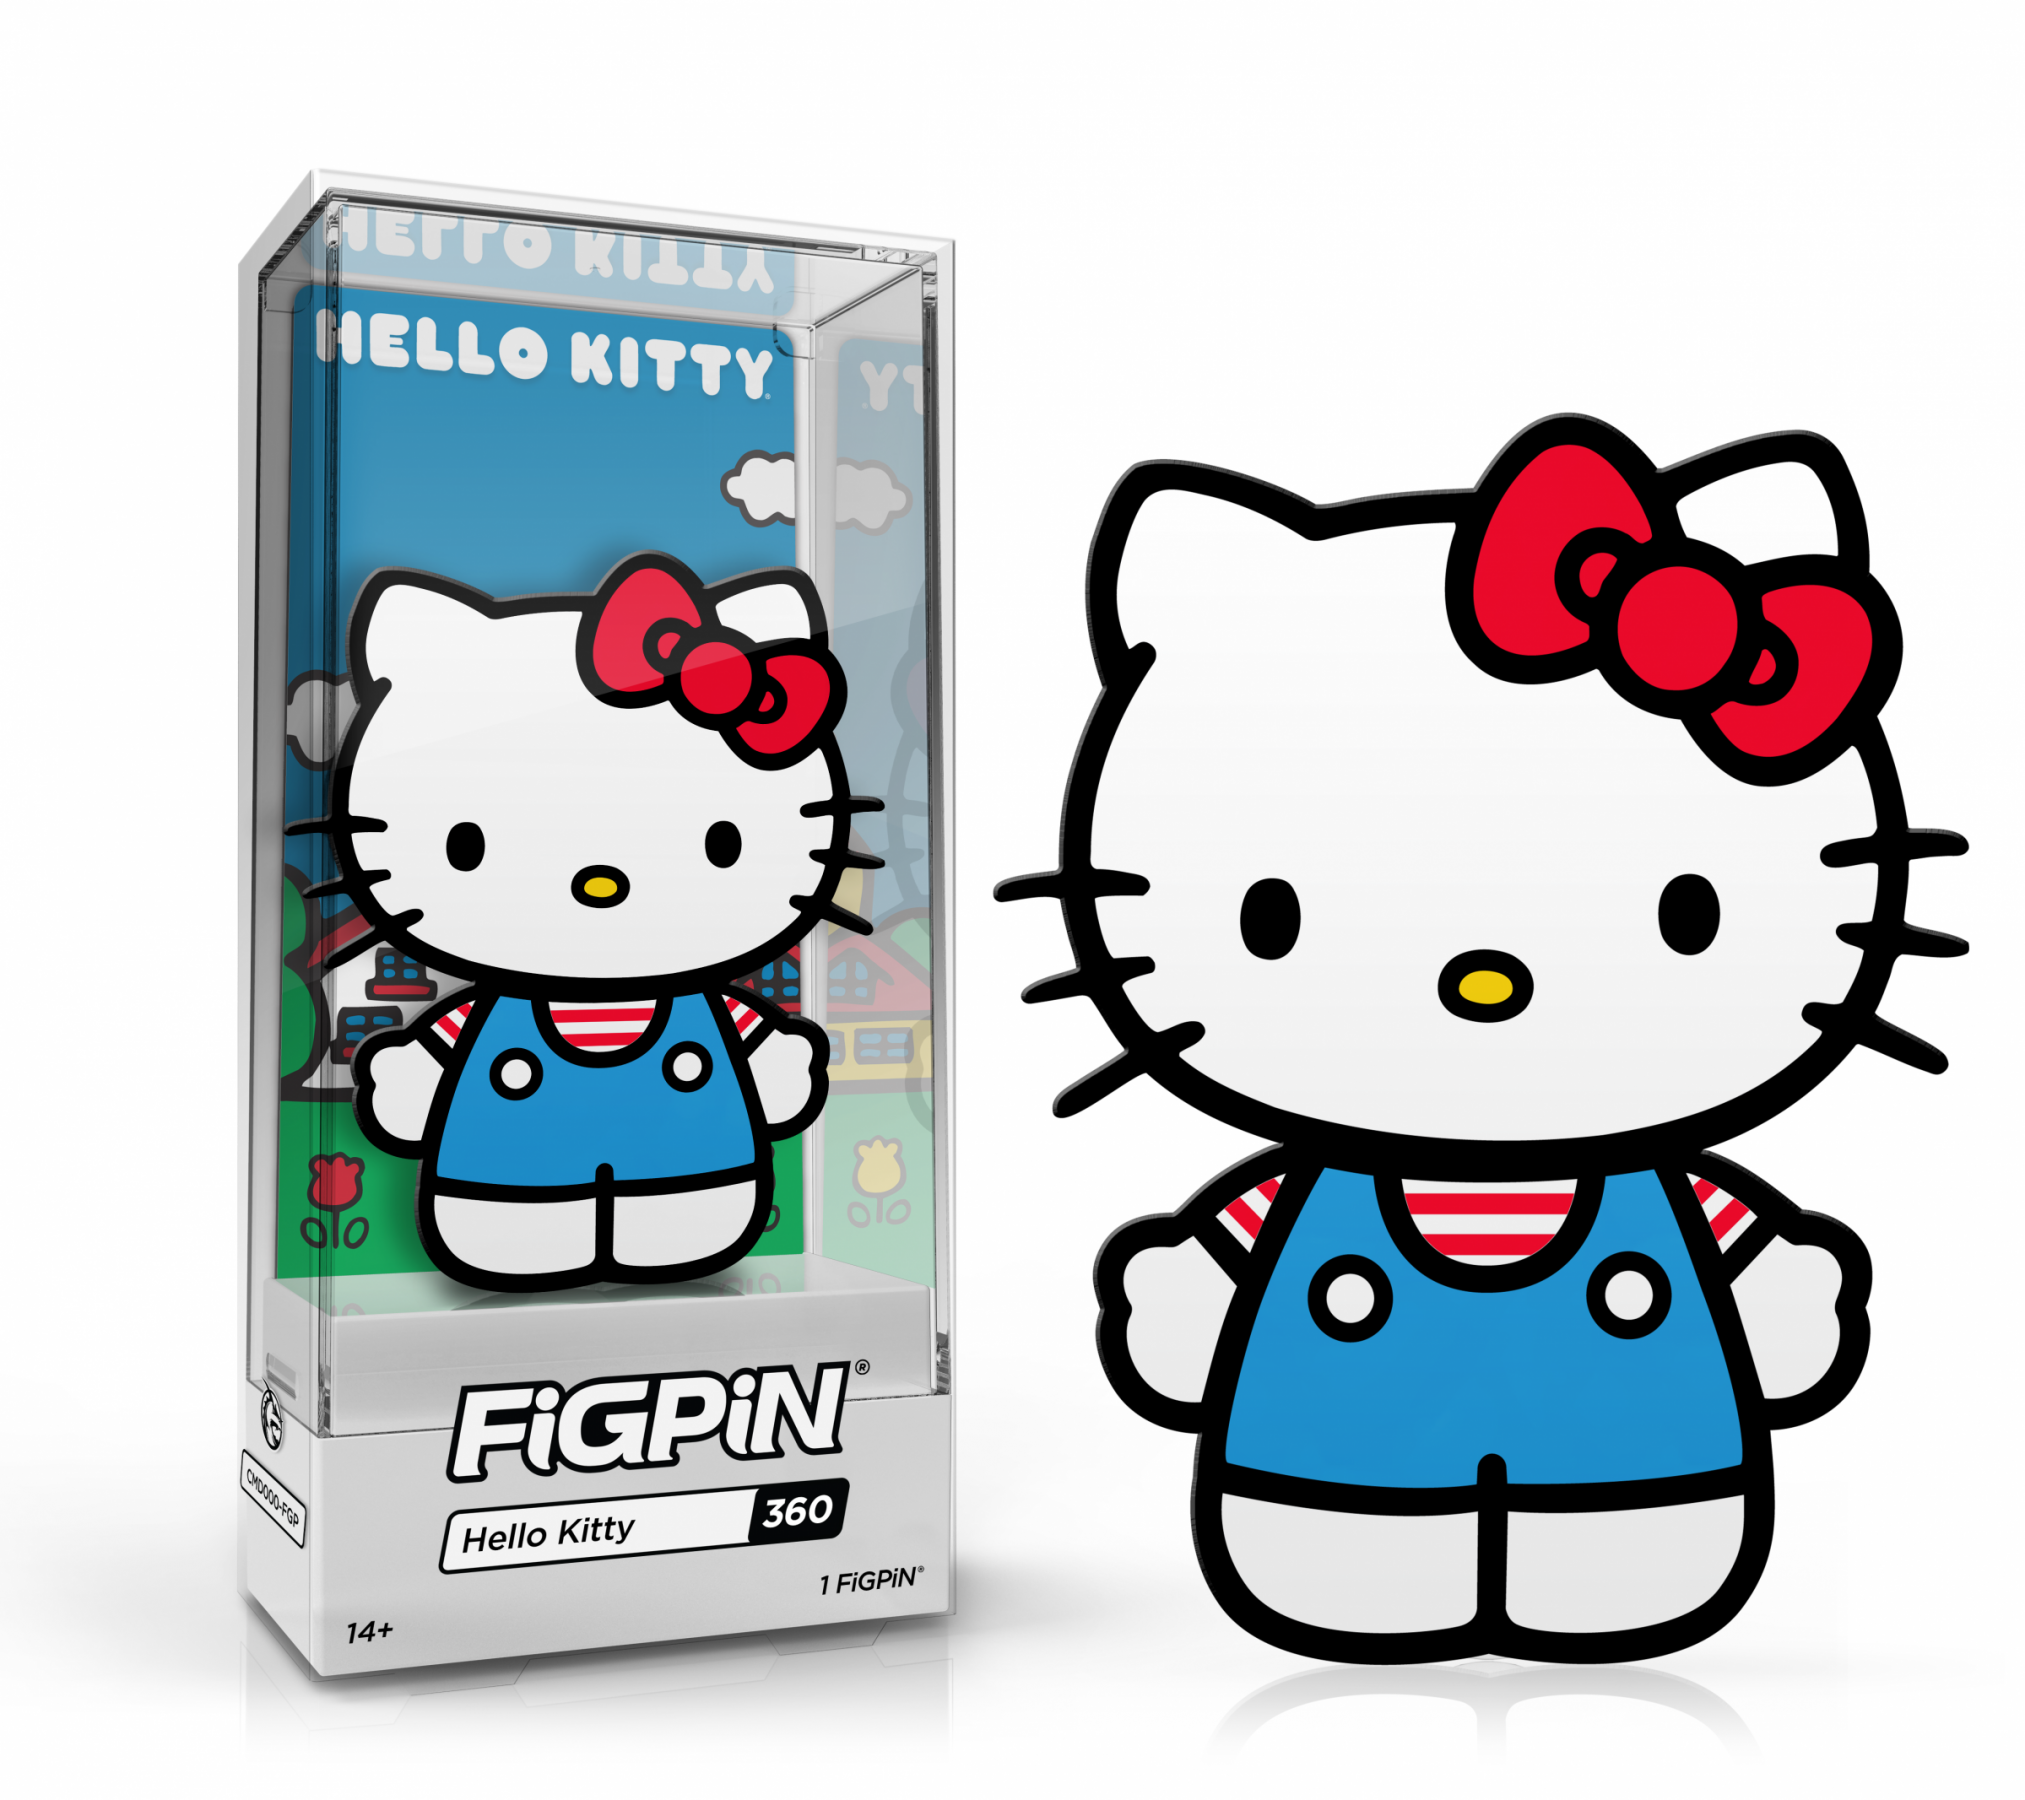 FiGPiN Hello Kitty (360) Collectable Enamel Pin MK9L60R4N8 |27842|